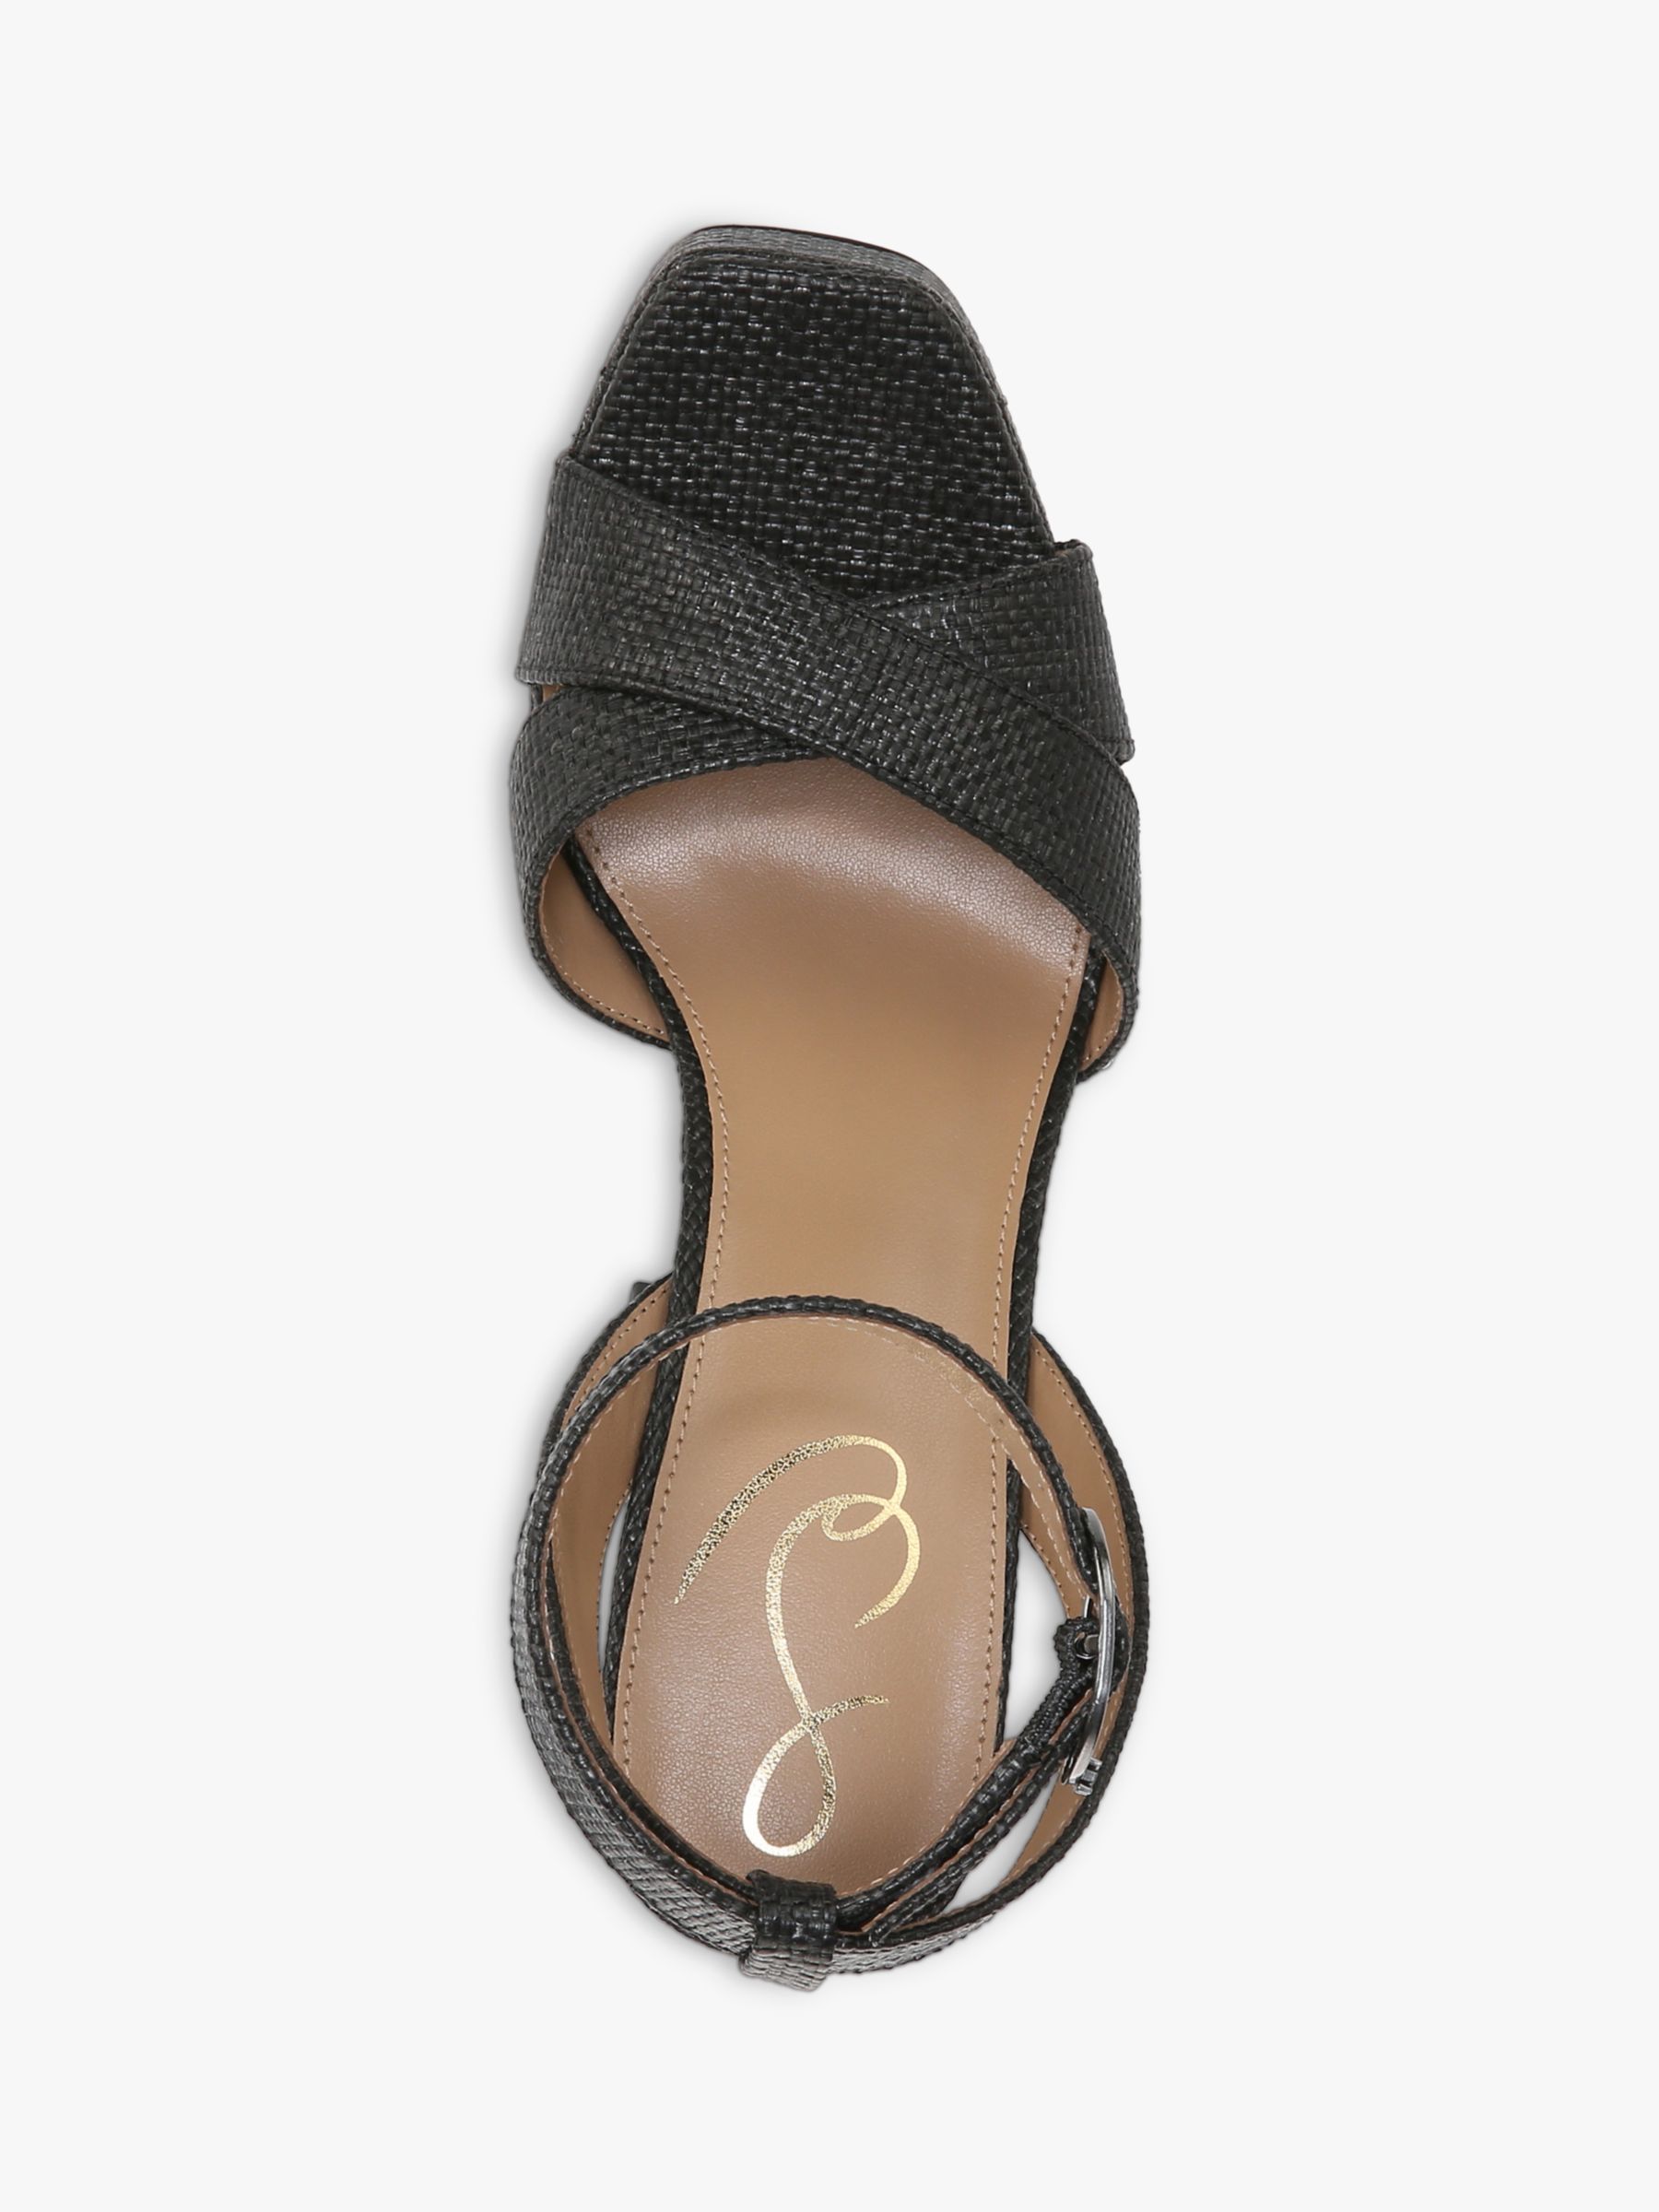 Sam Edelman Kayna Woven Platform Sandals, Black at John Lewis & Partners